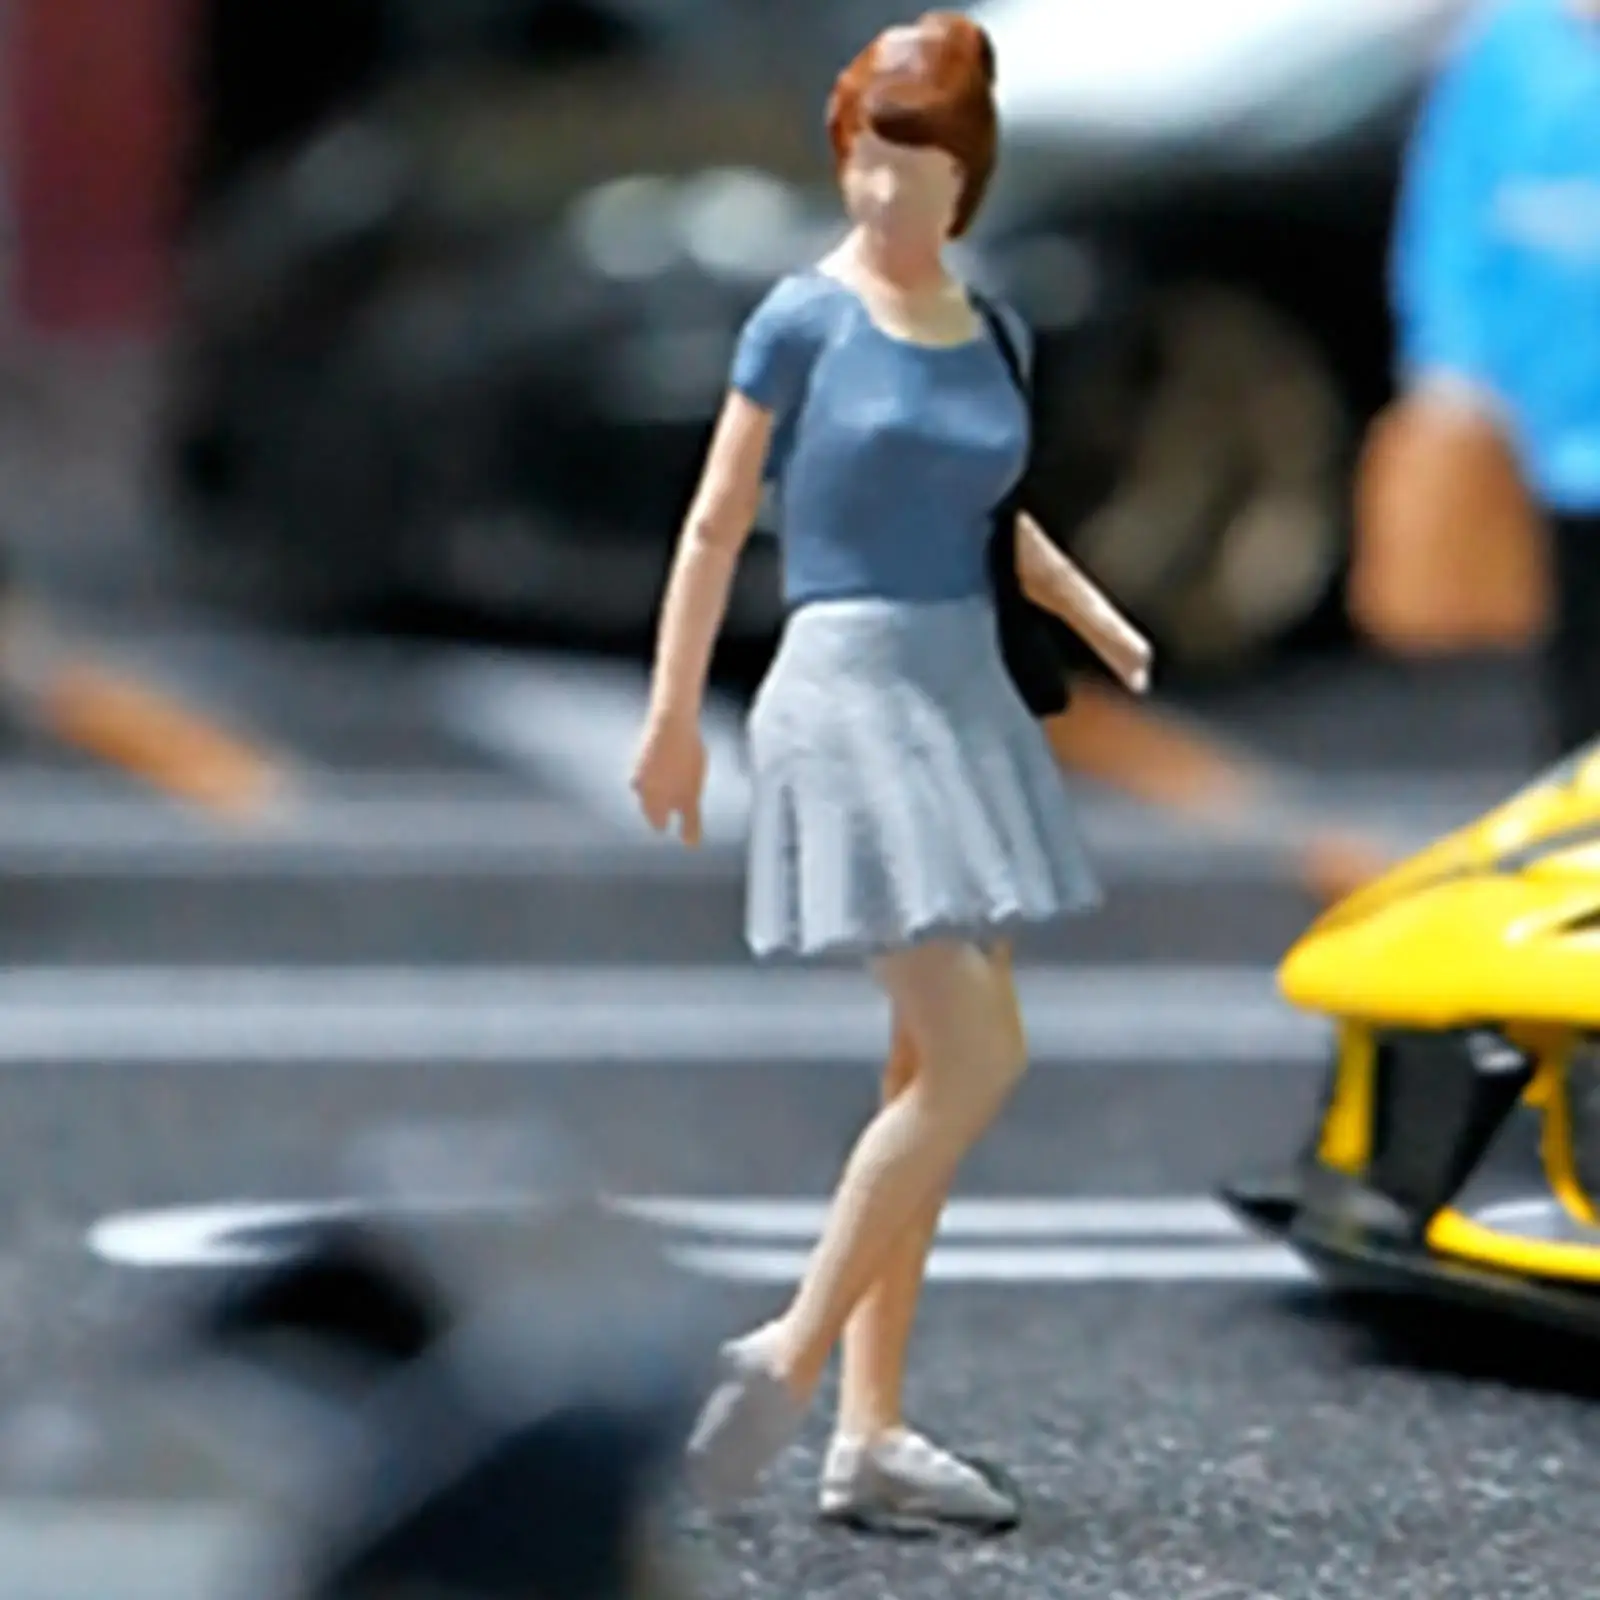 1/64 Miniature Figure Blue Skirt Girl Realistic Mini Handpainted Scene Layout for Dollhouse Accessories Railway Desktop Ornament